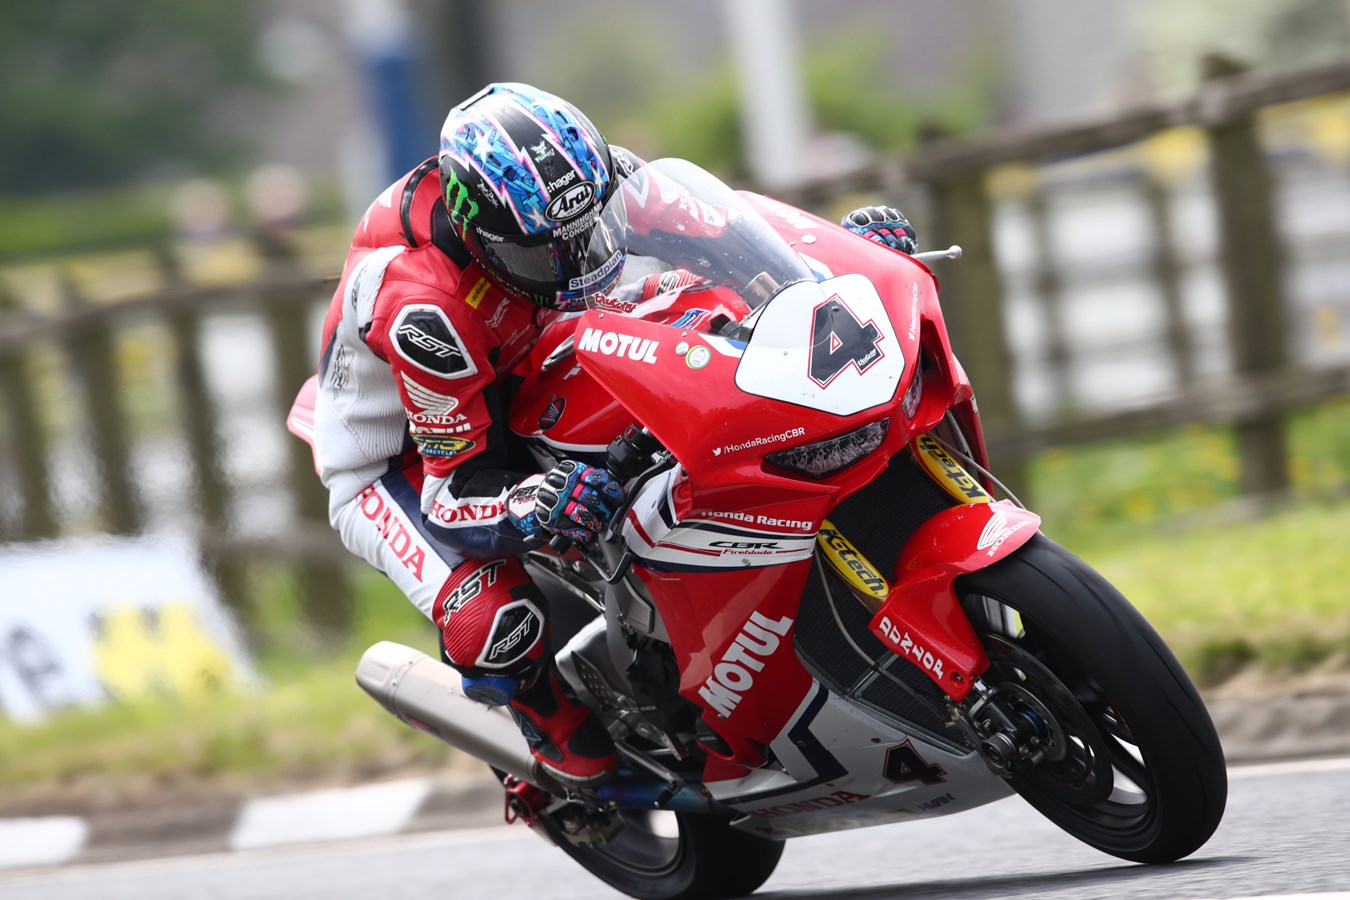 Honda Racing focused on the Isle of Man TT races